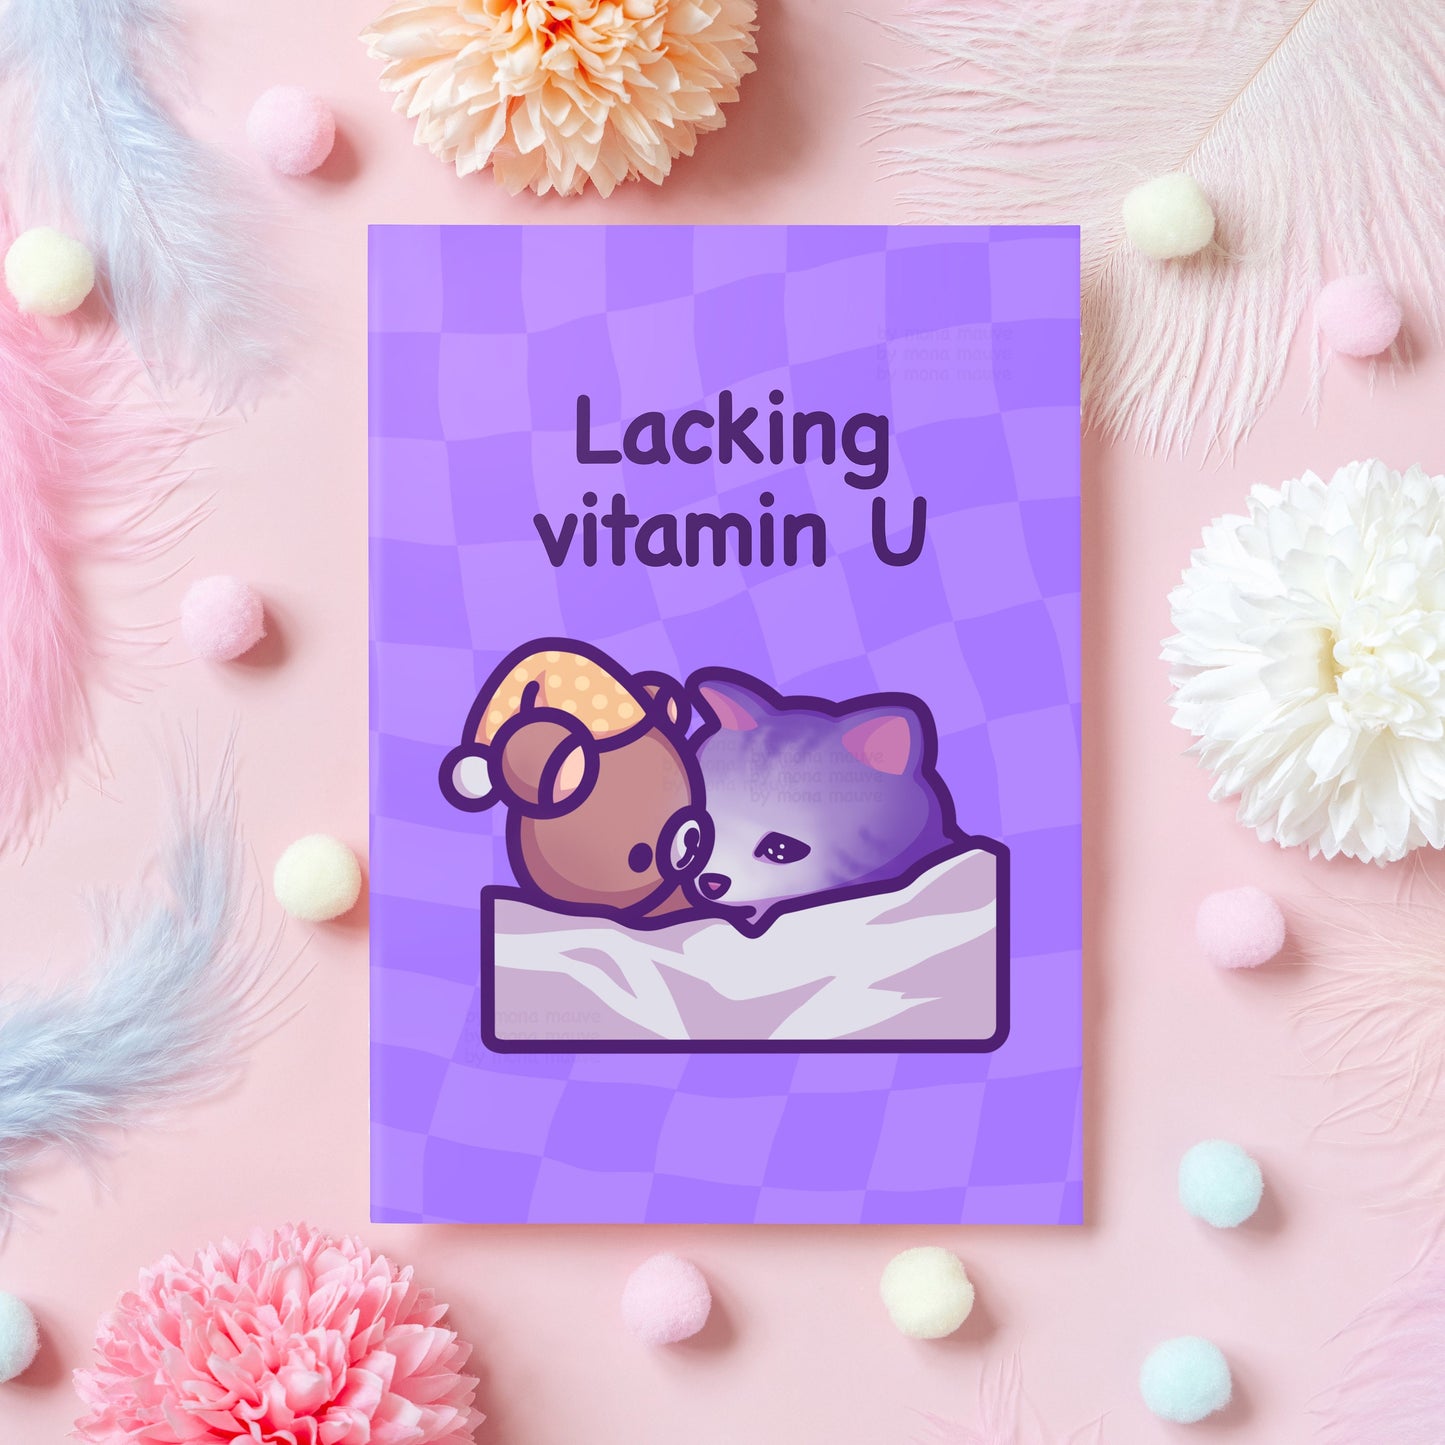 Lacking Vitamin U | Funny "I Miss You" Card